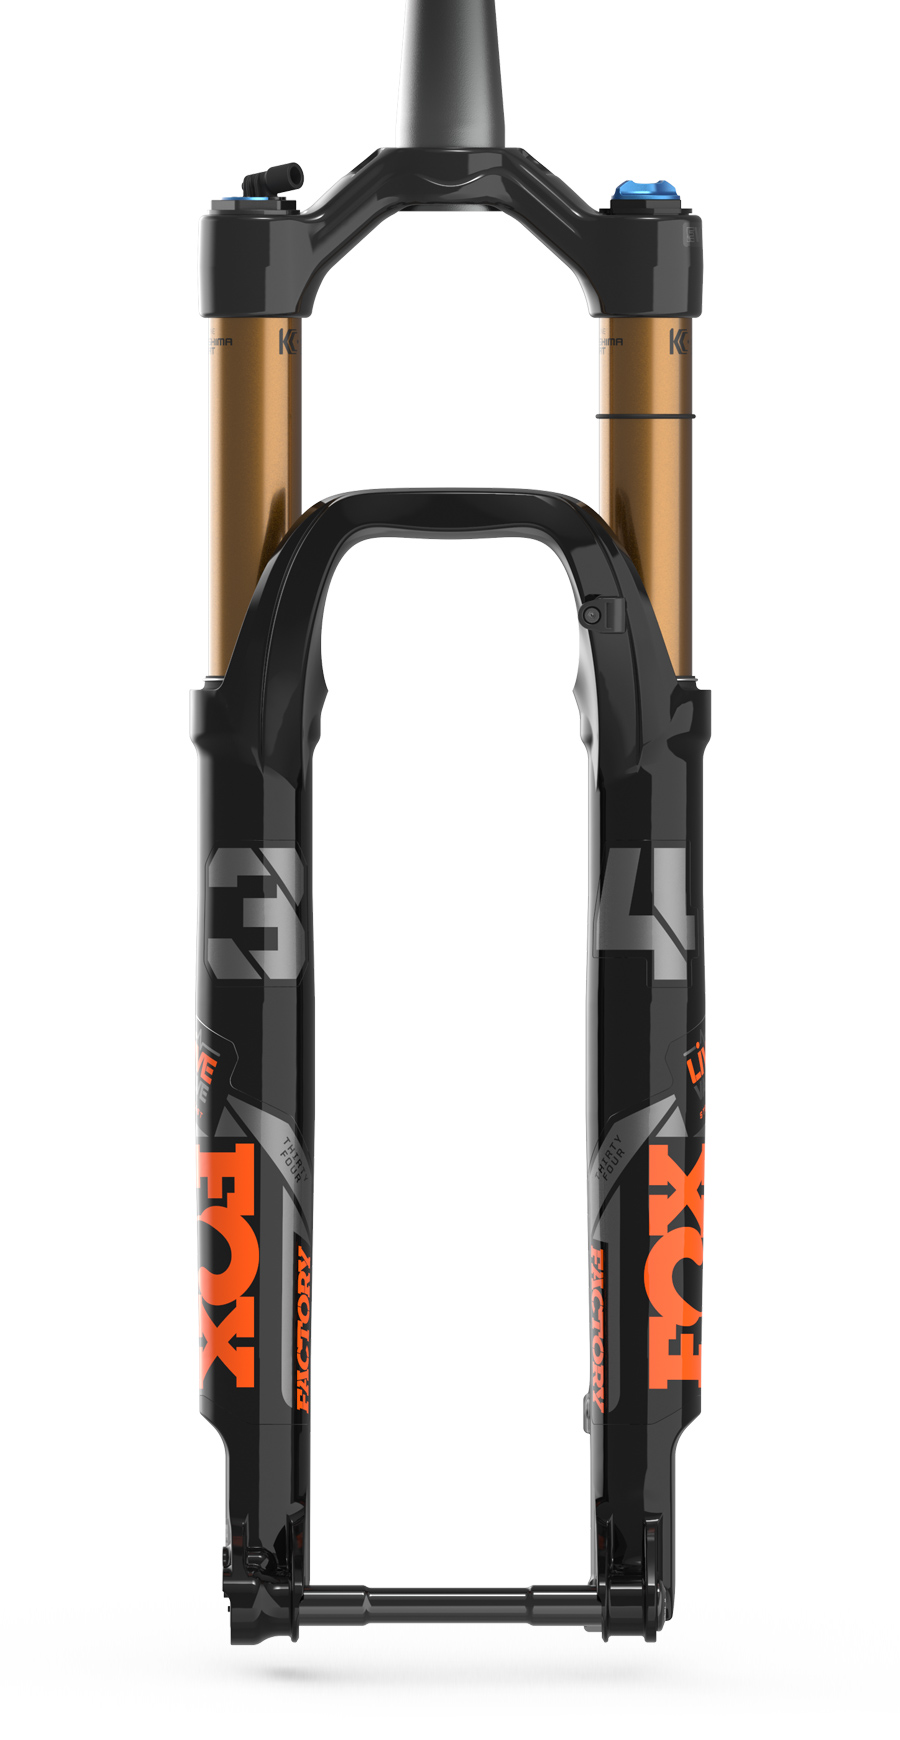 34mm tube diameter MTB BMX mountain bike fork seal kit fits some FOX ARI.A008